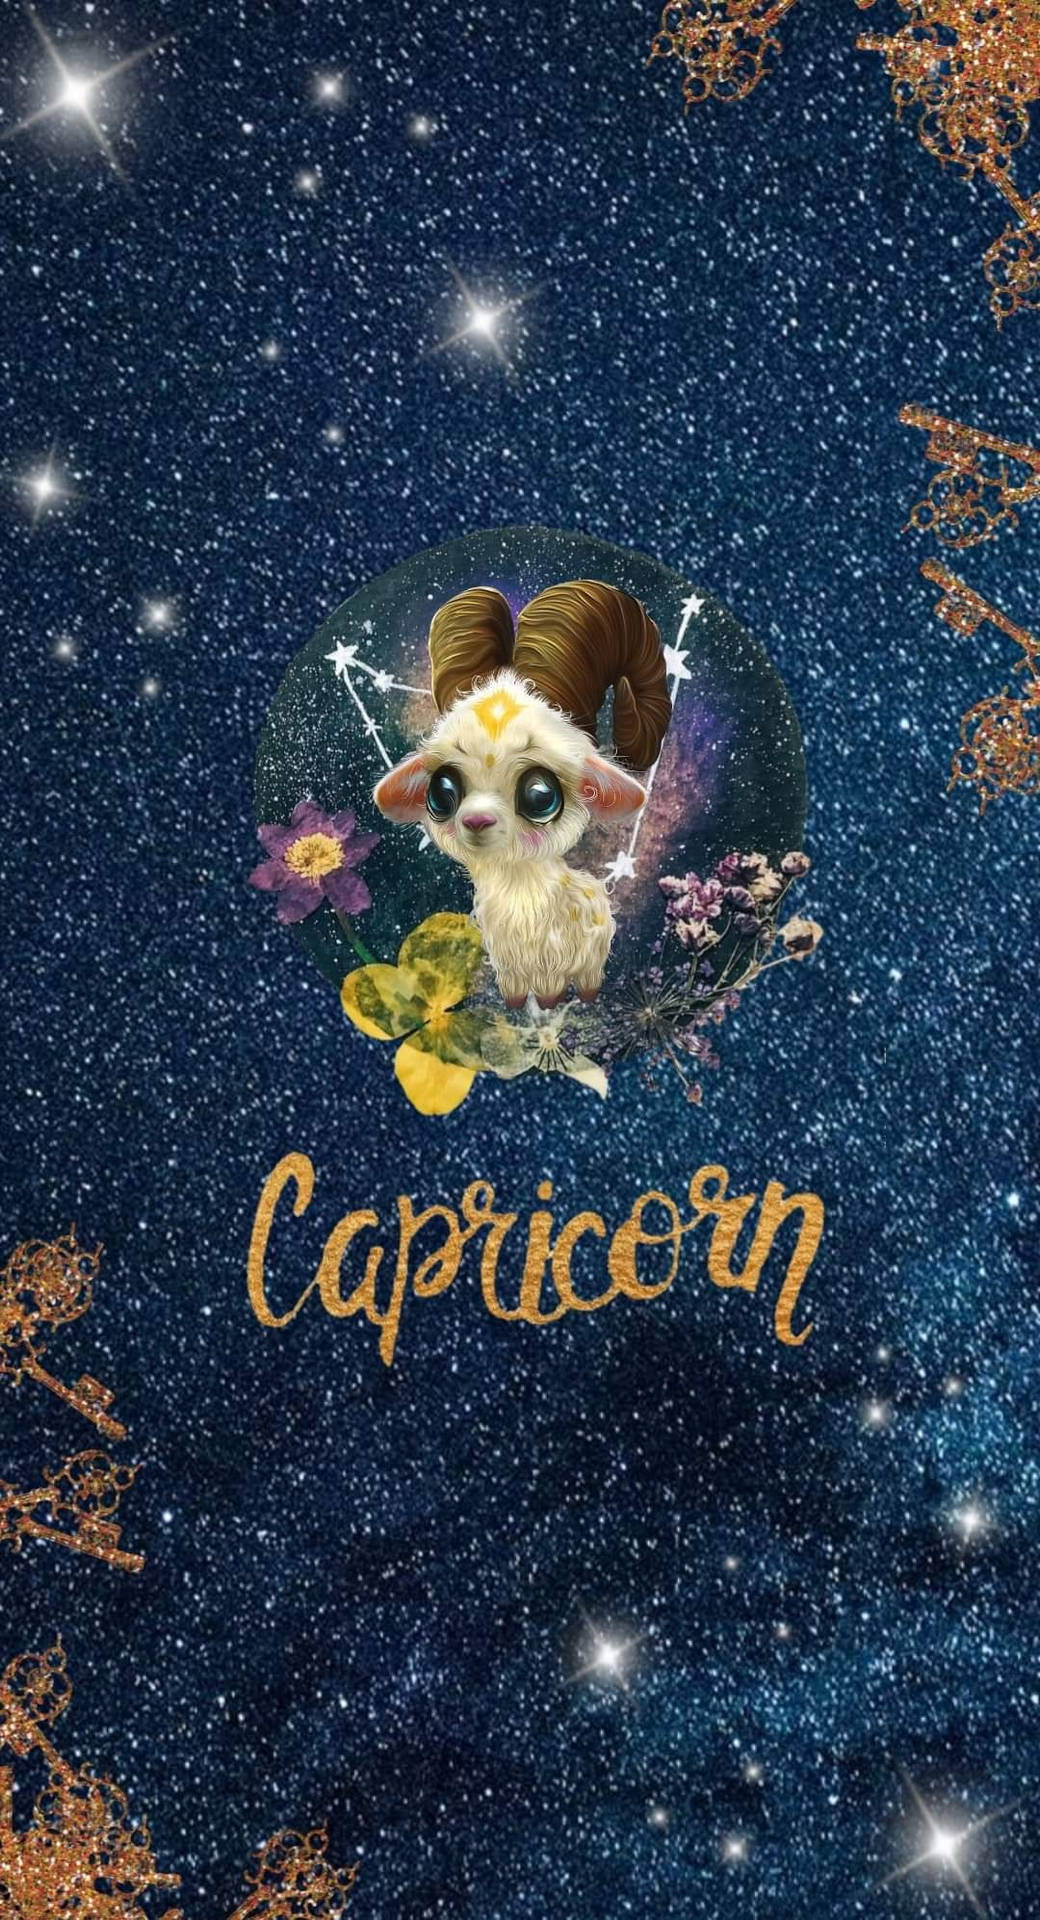 Free Capricorn Wallpaper Downloads, Capricorn Wallpaper for FREE